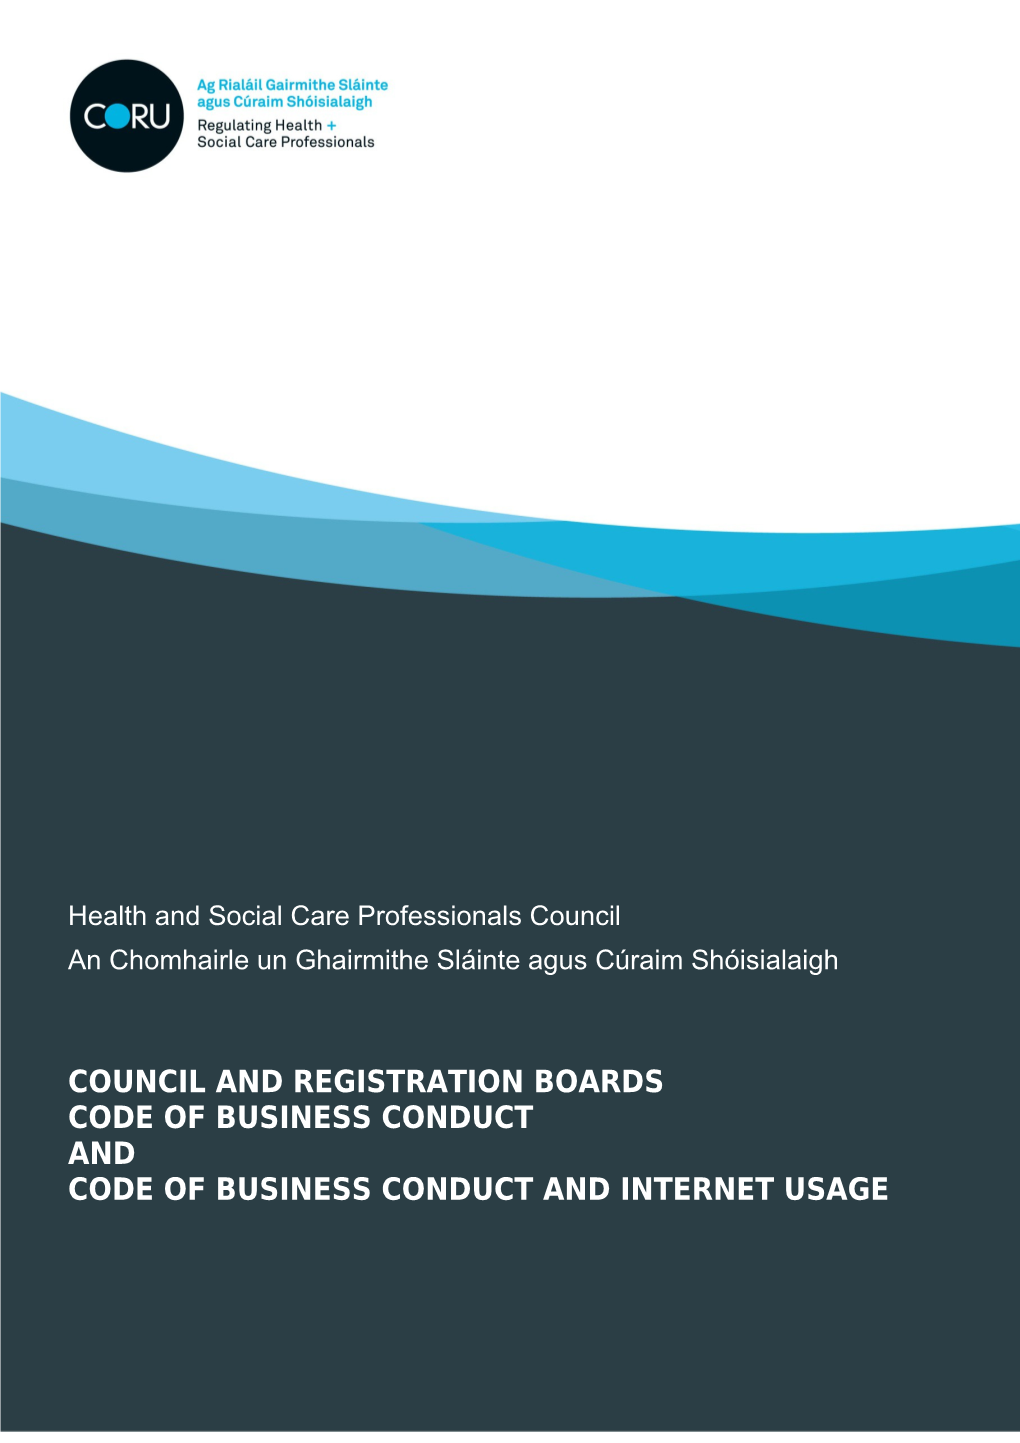 Health and Social Care Professionals Council (Coru)